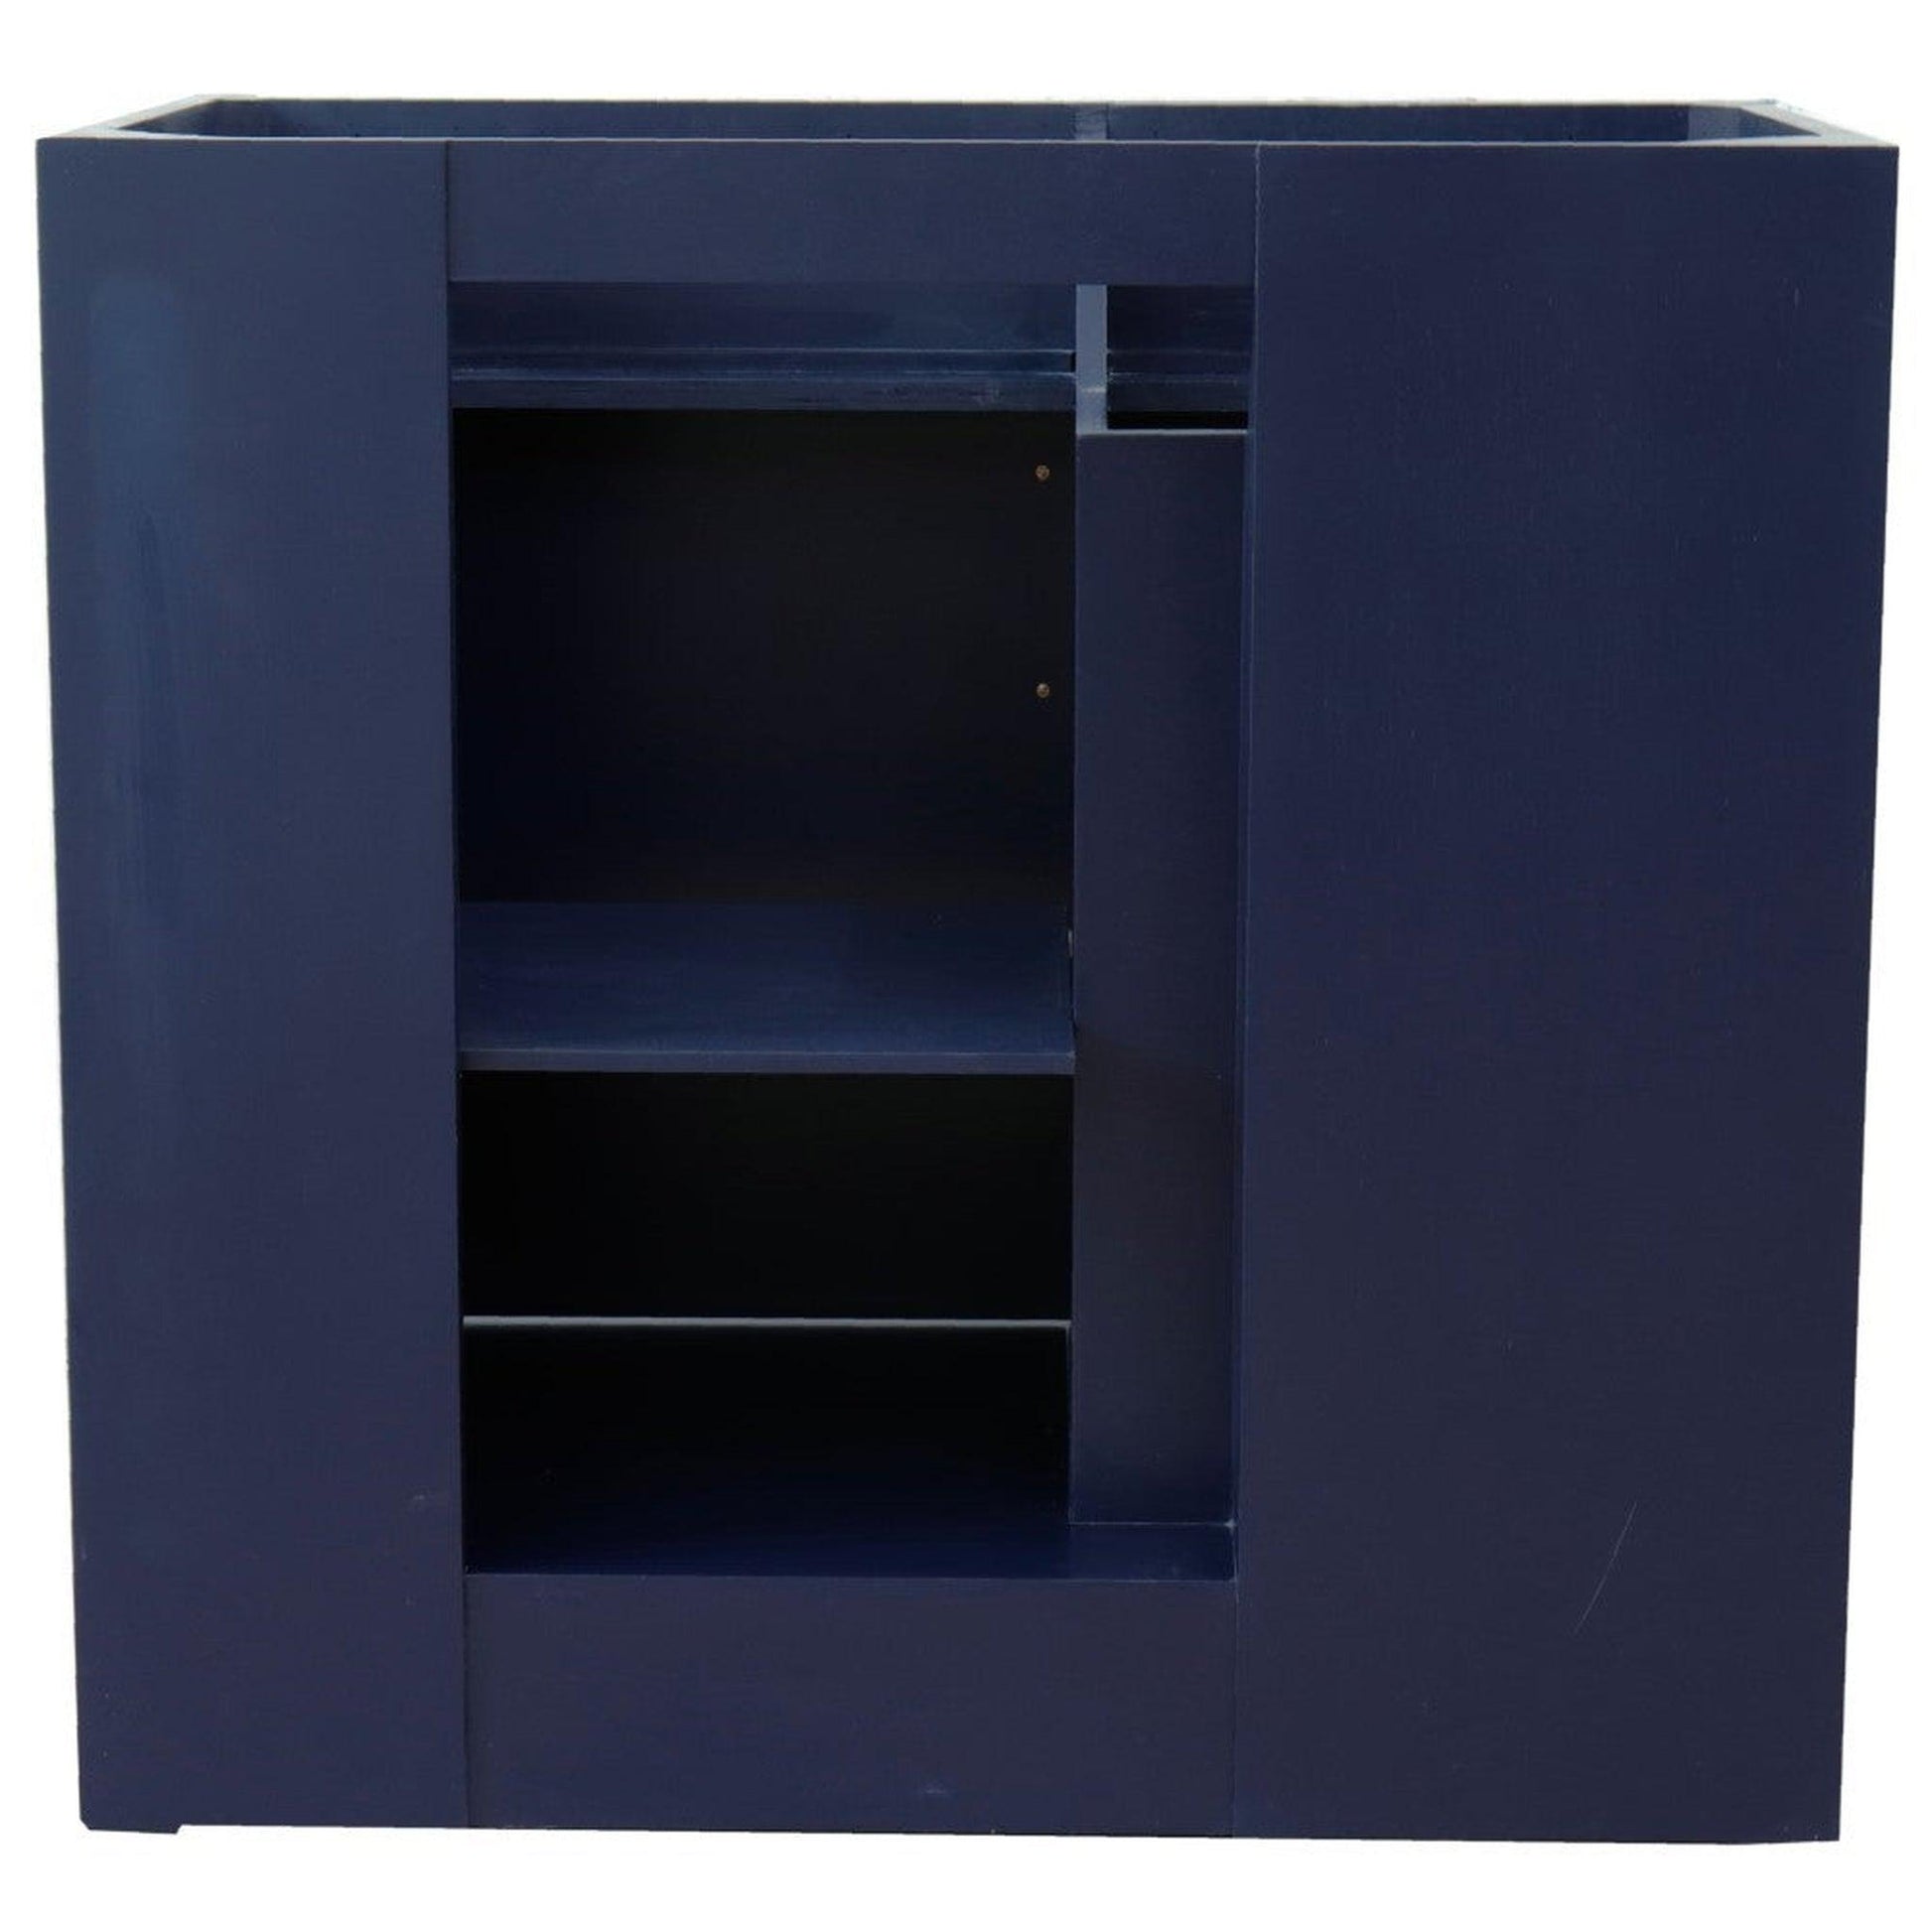 Bellaterra Home Terni 37" 1-Door 2-Drawer Blue Freestanding Vanity Set With Ceramic Right Offset Vessel Sink and Gray Granite Top, and Right Door Base